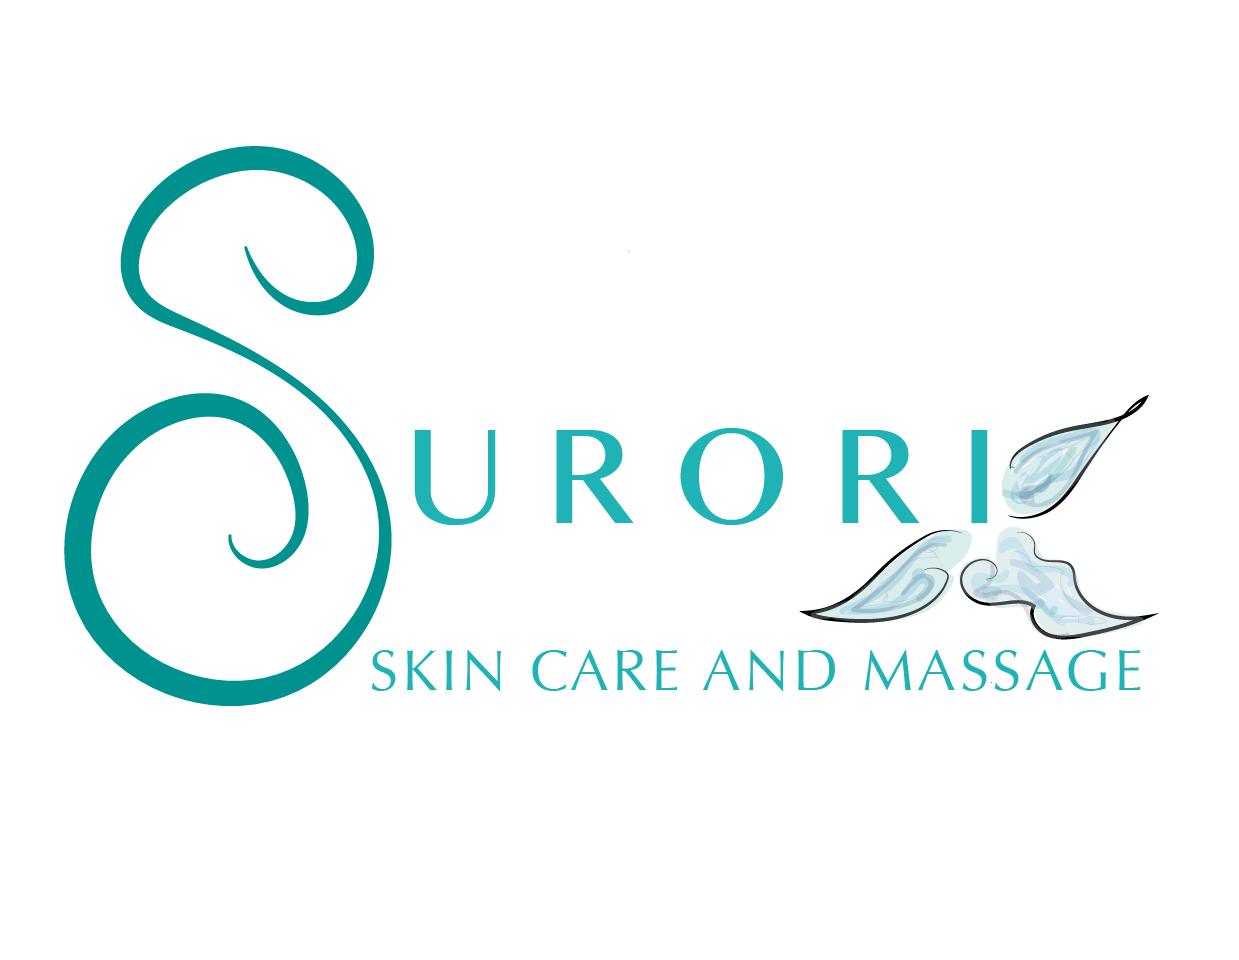 Surori Skin Care and Massage